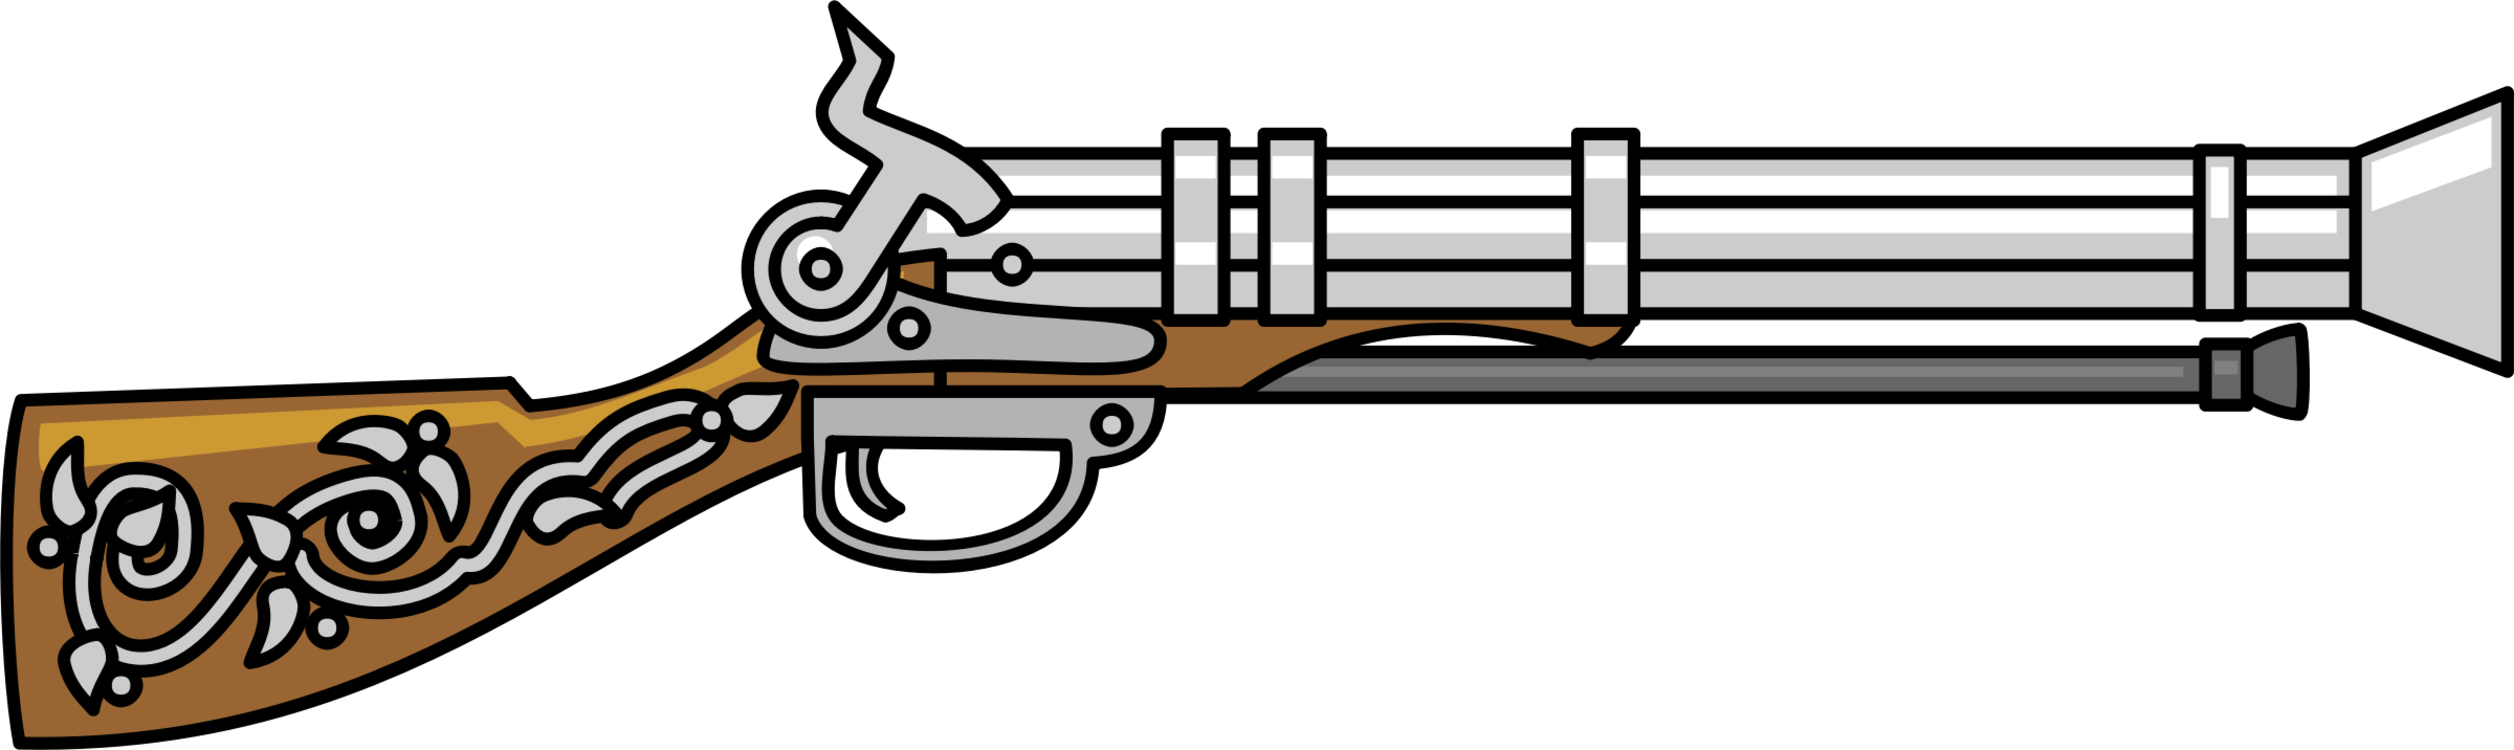 Ranged Weapon,Gun,Firearm